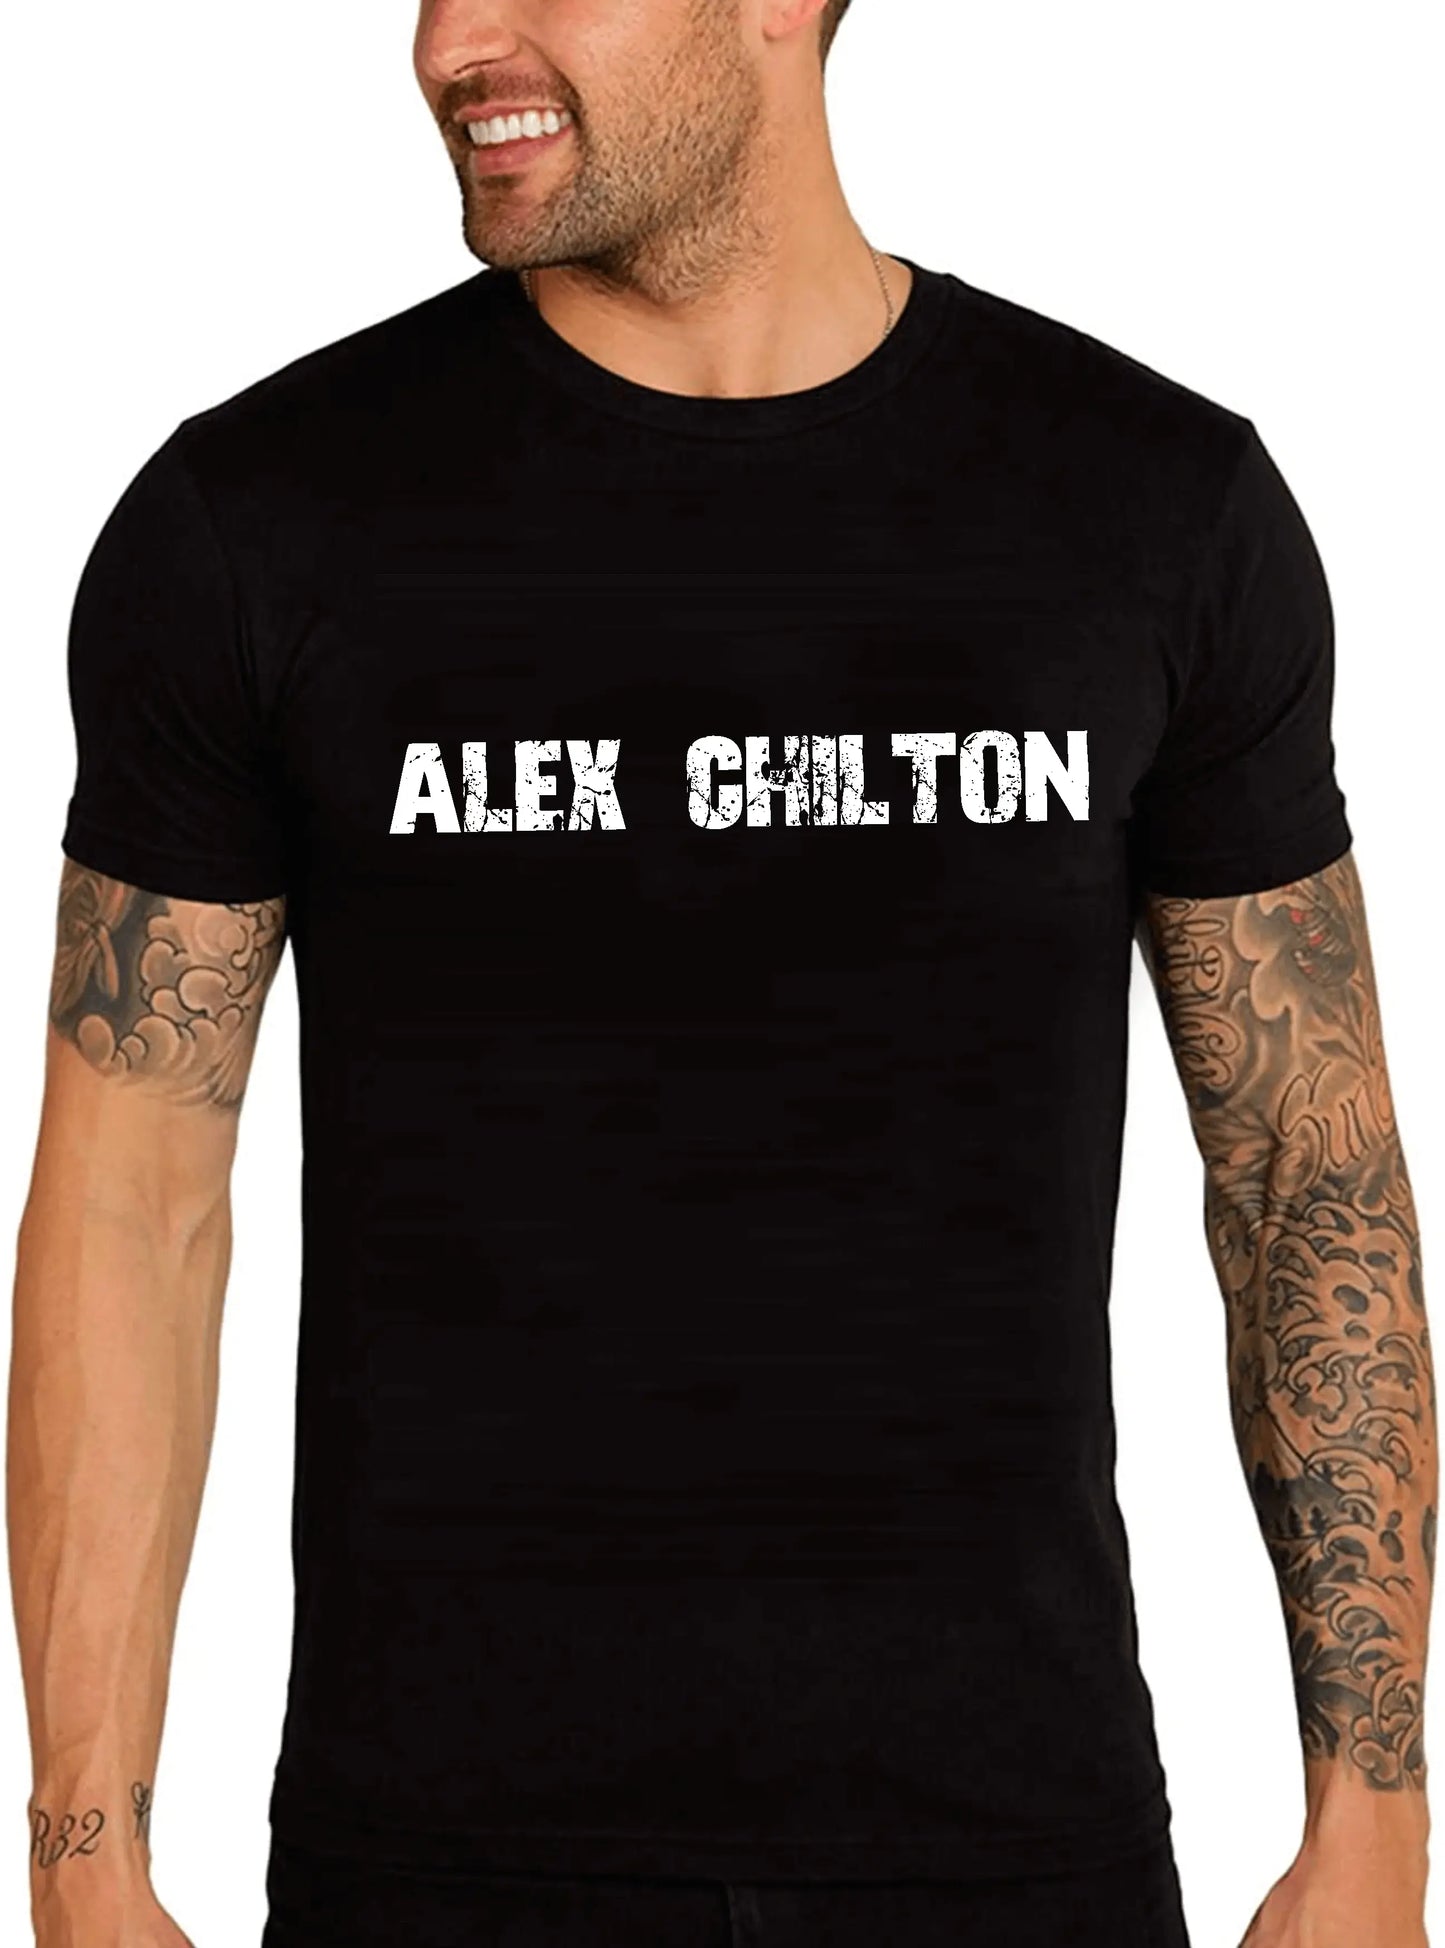 Men's Graphic T-Shirt Alex Chilton Eco-Friendly Limited Edition Short Sleeve Tee-Shirt Vintage Birthday Gift Novelty